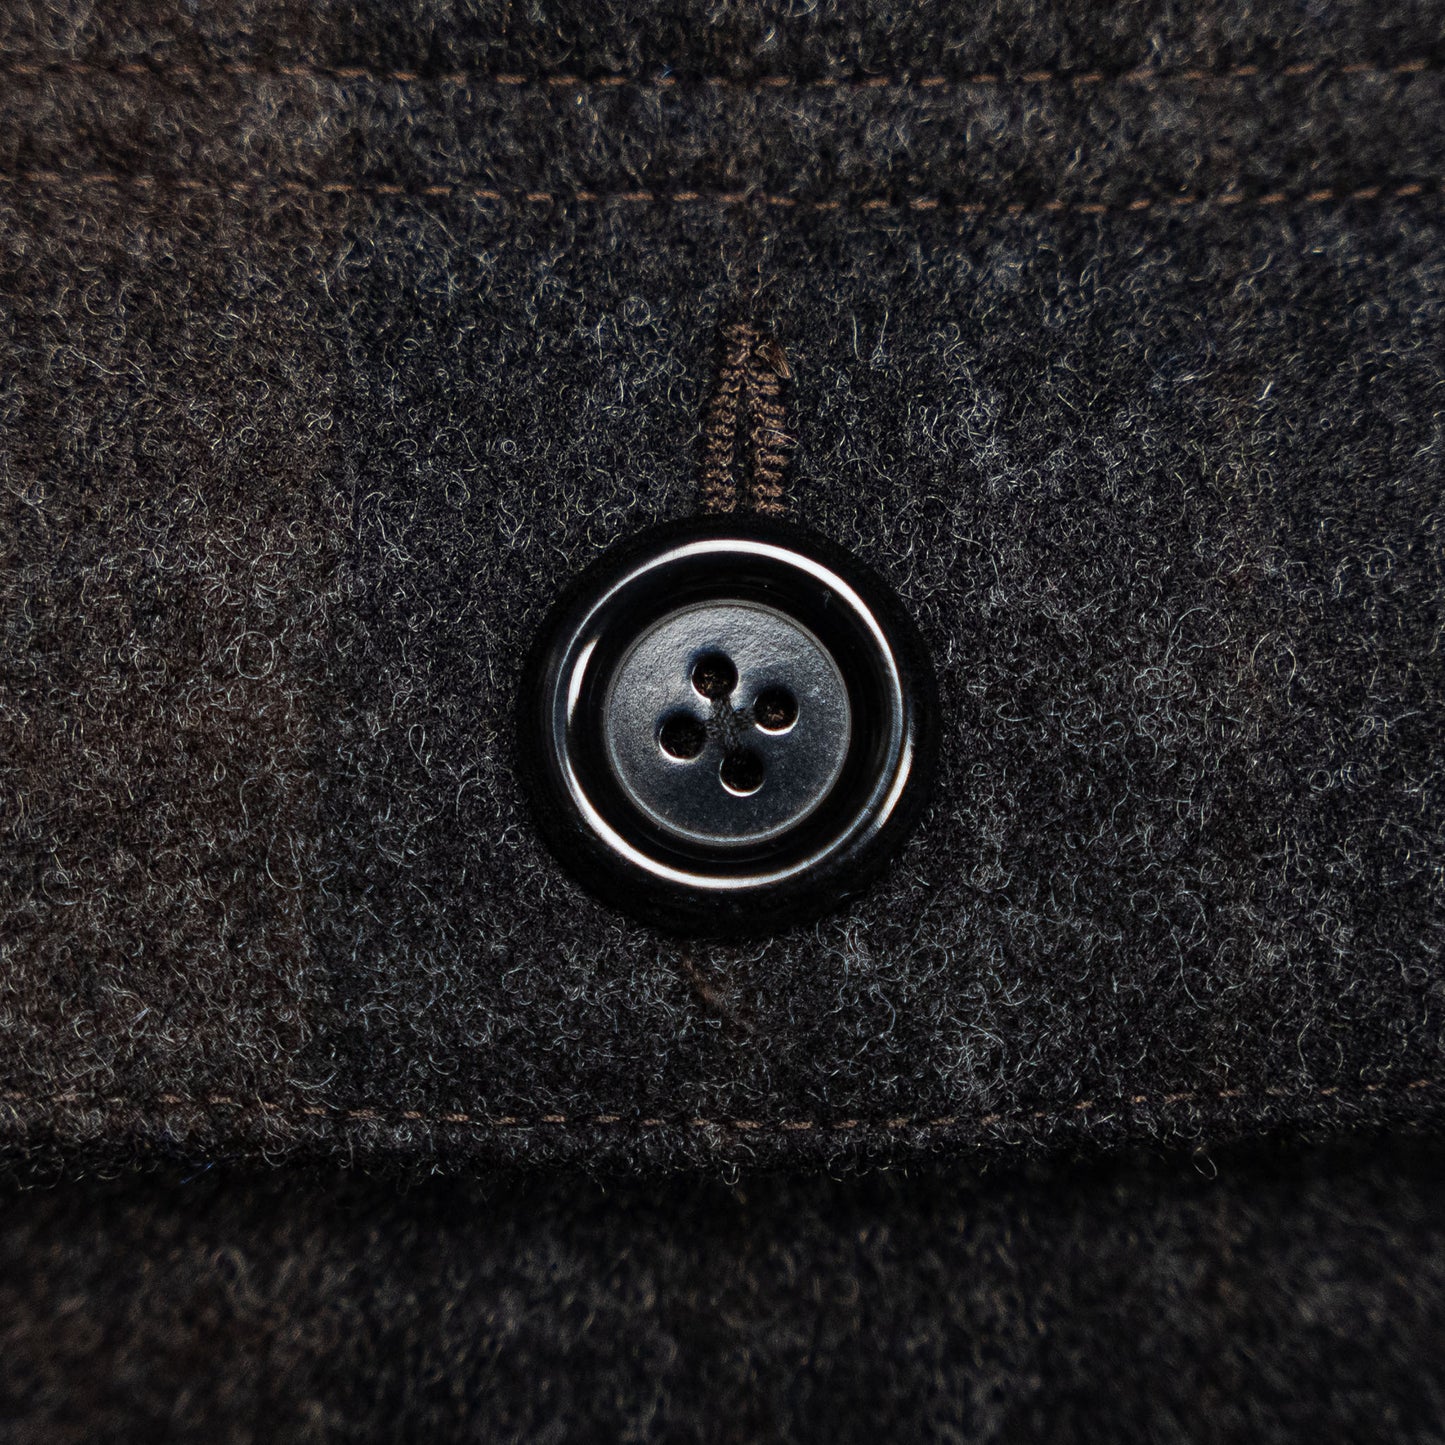 Corozo nut button of the Iron Snail Mammoth jacket.